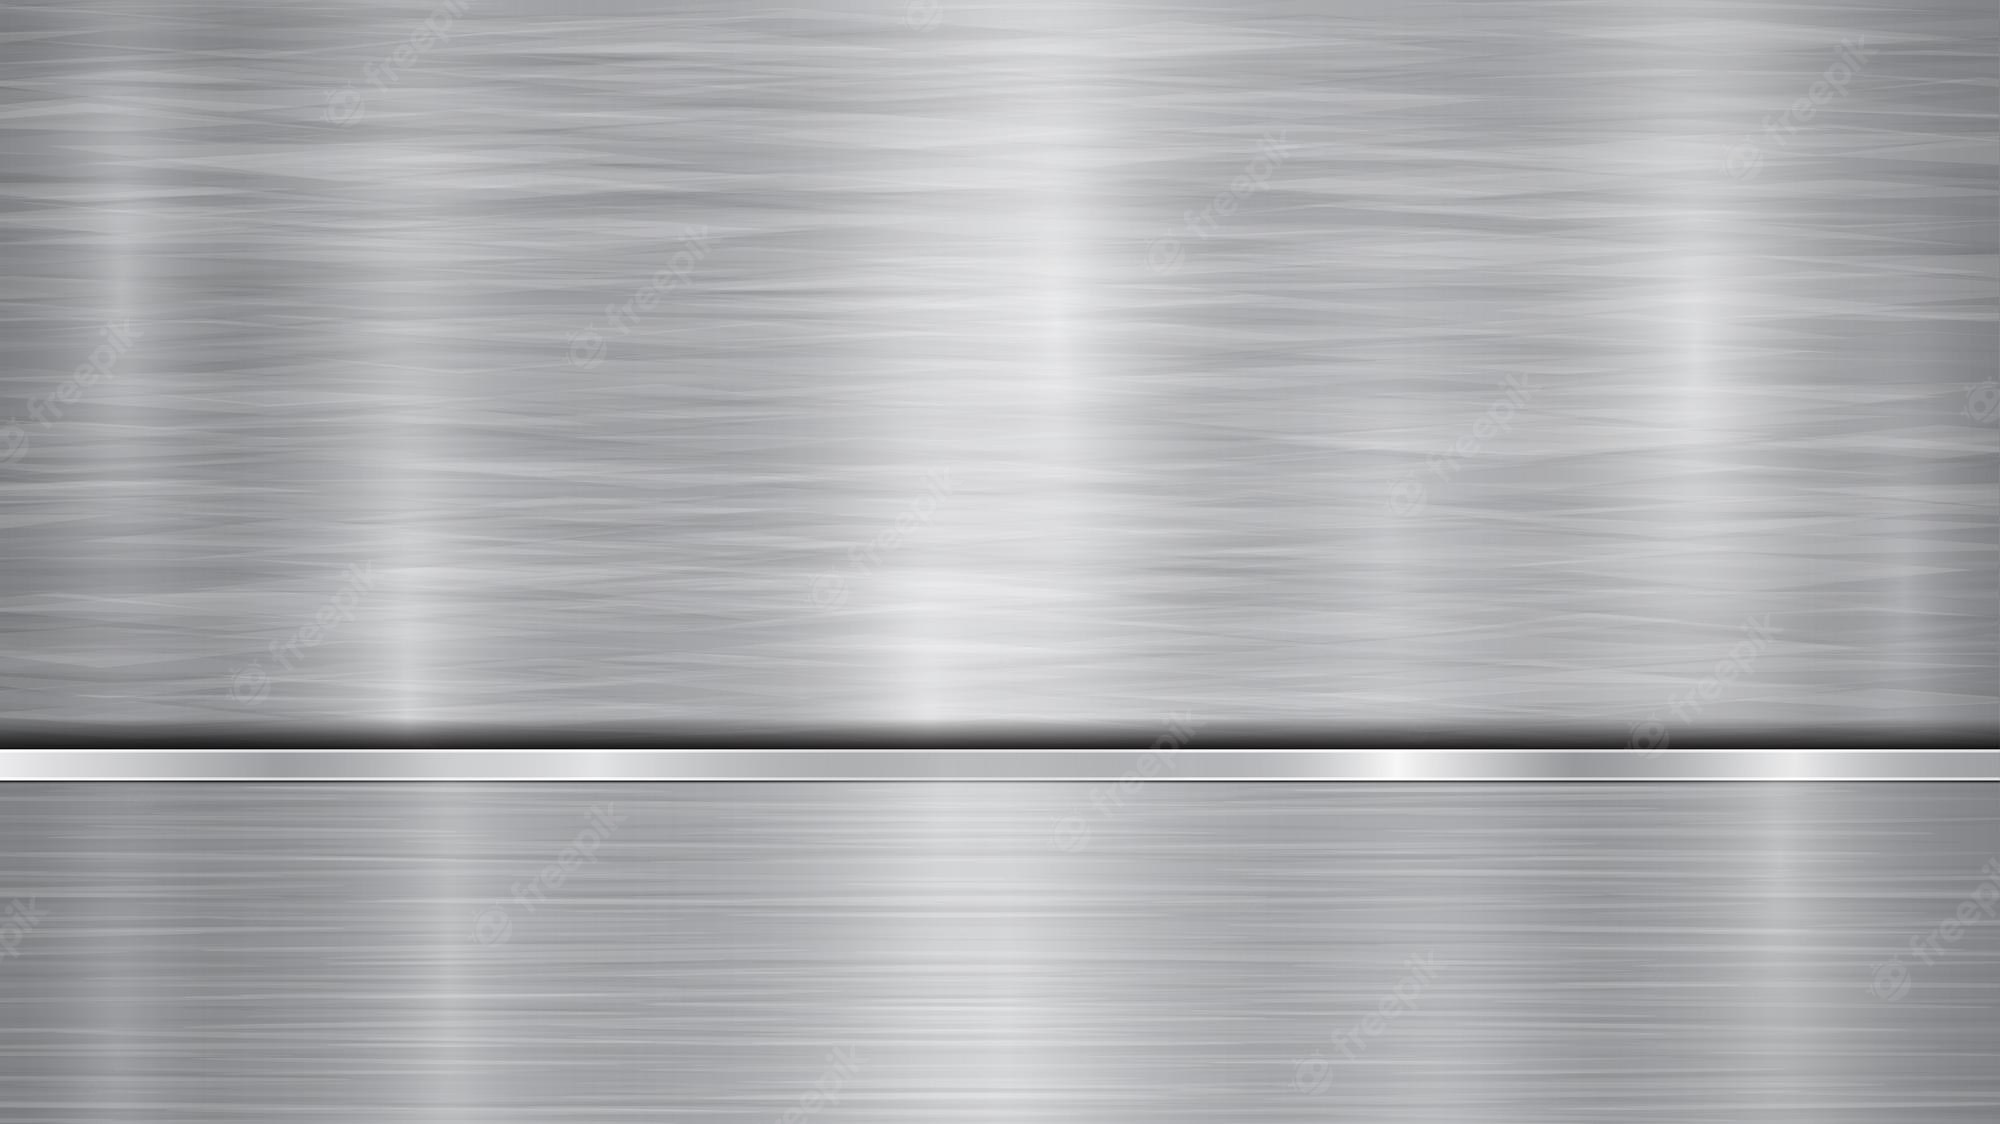 Metallic Silver Background